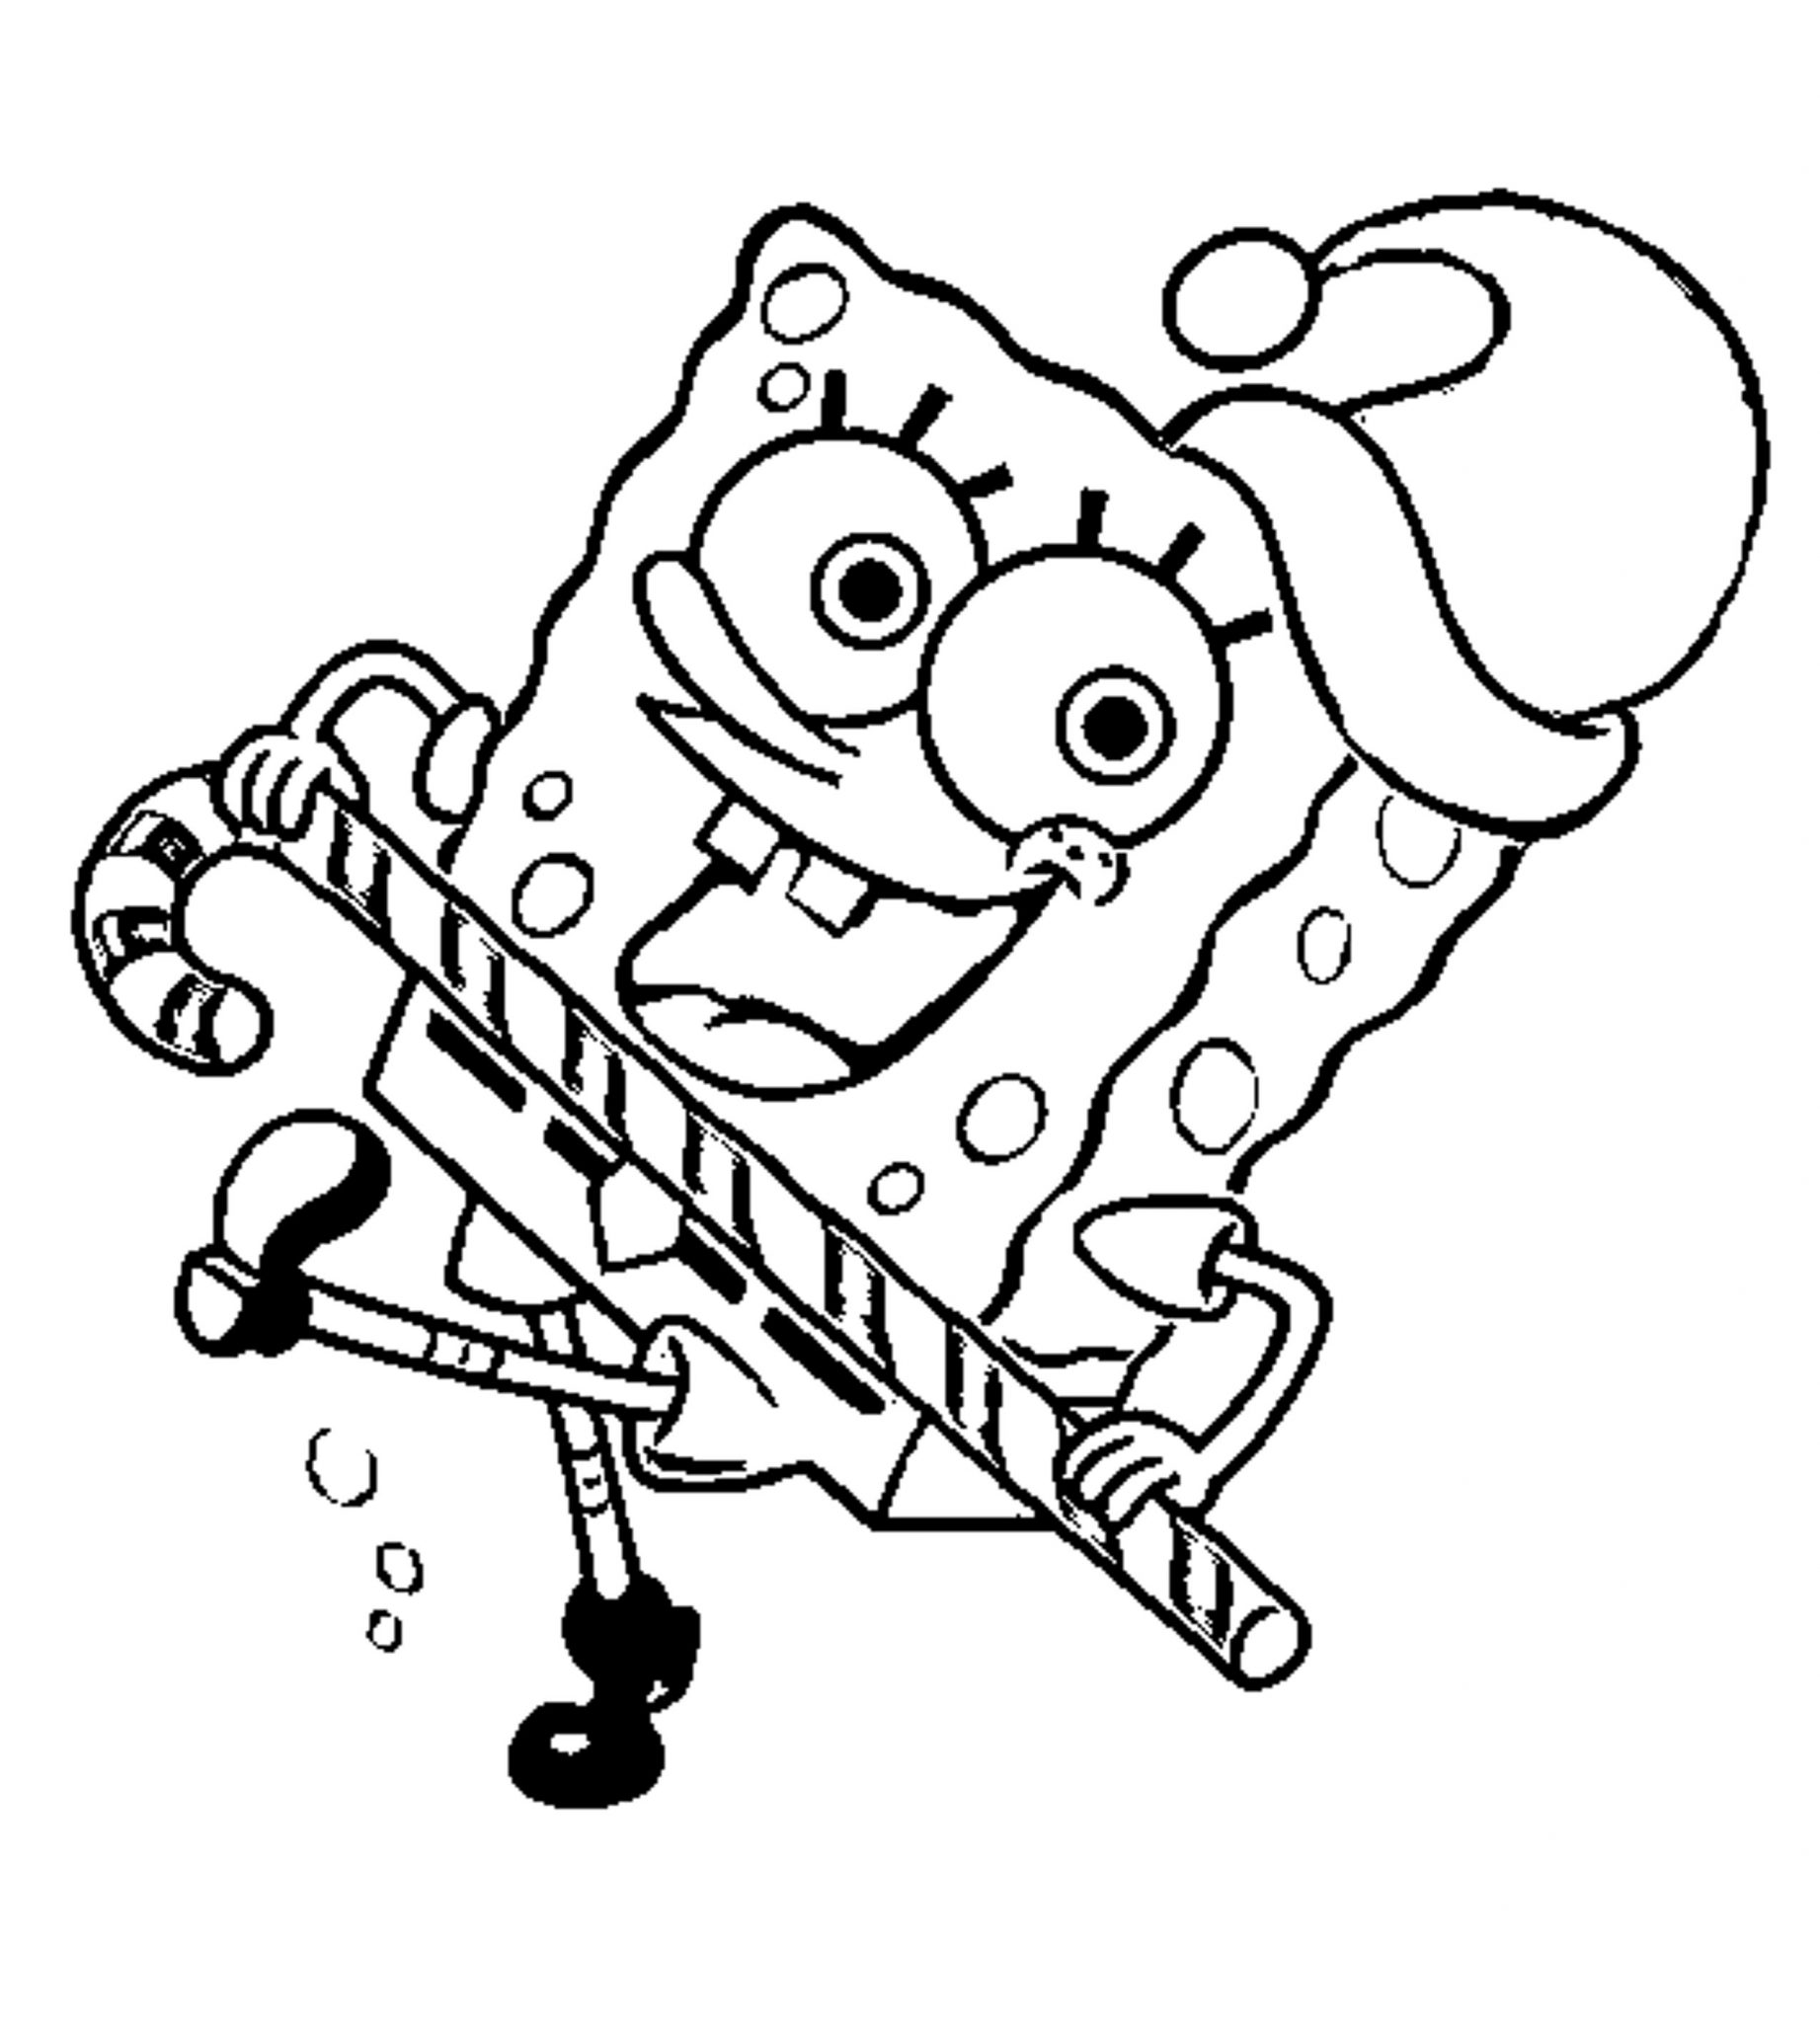 coloring pages of spongebob squarepants     BestAppsForKids.com